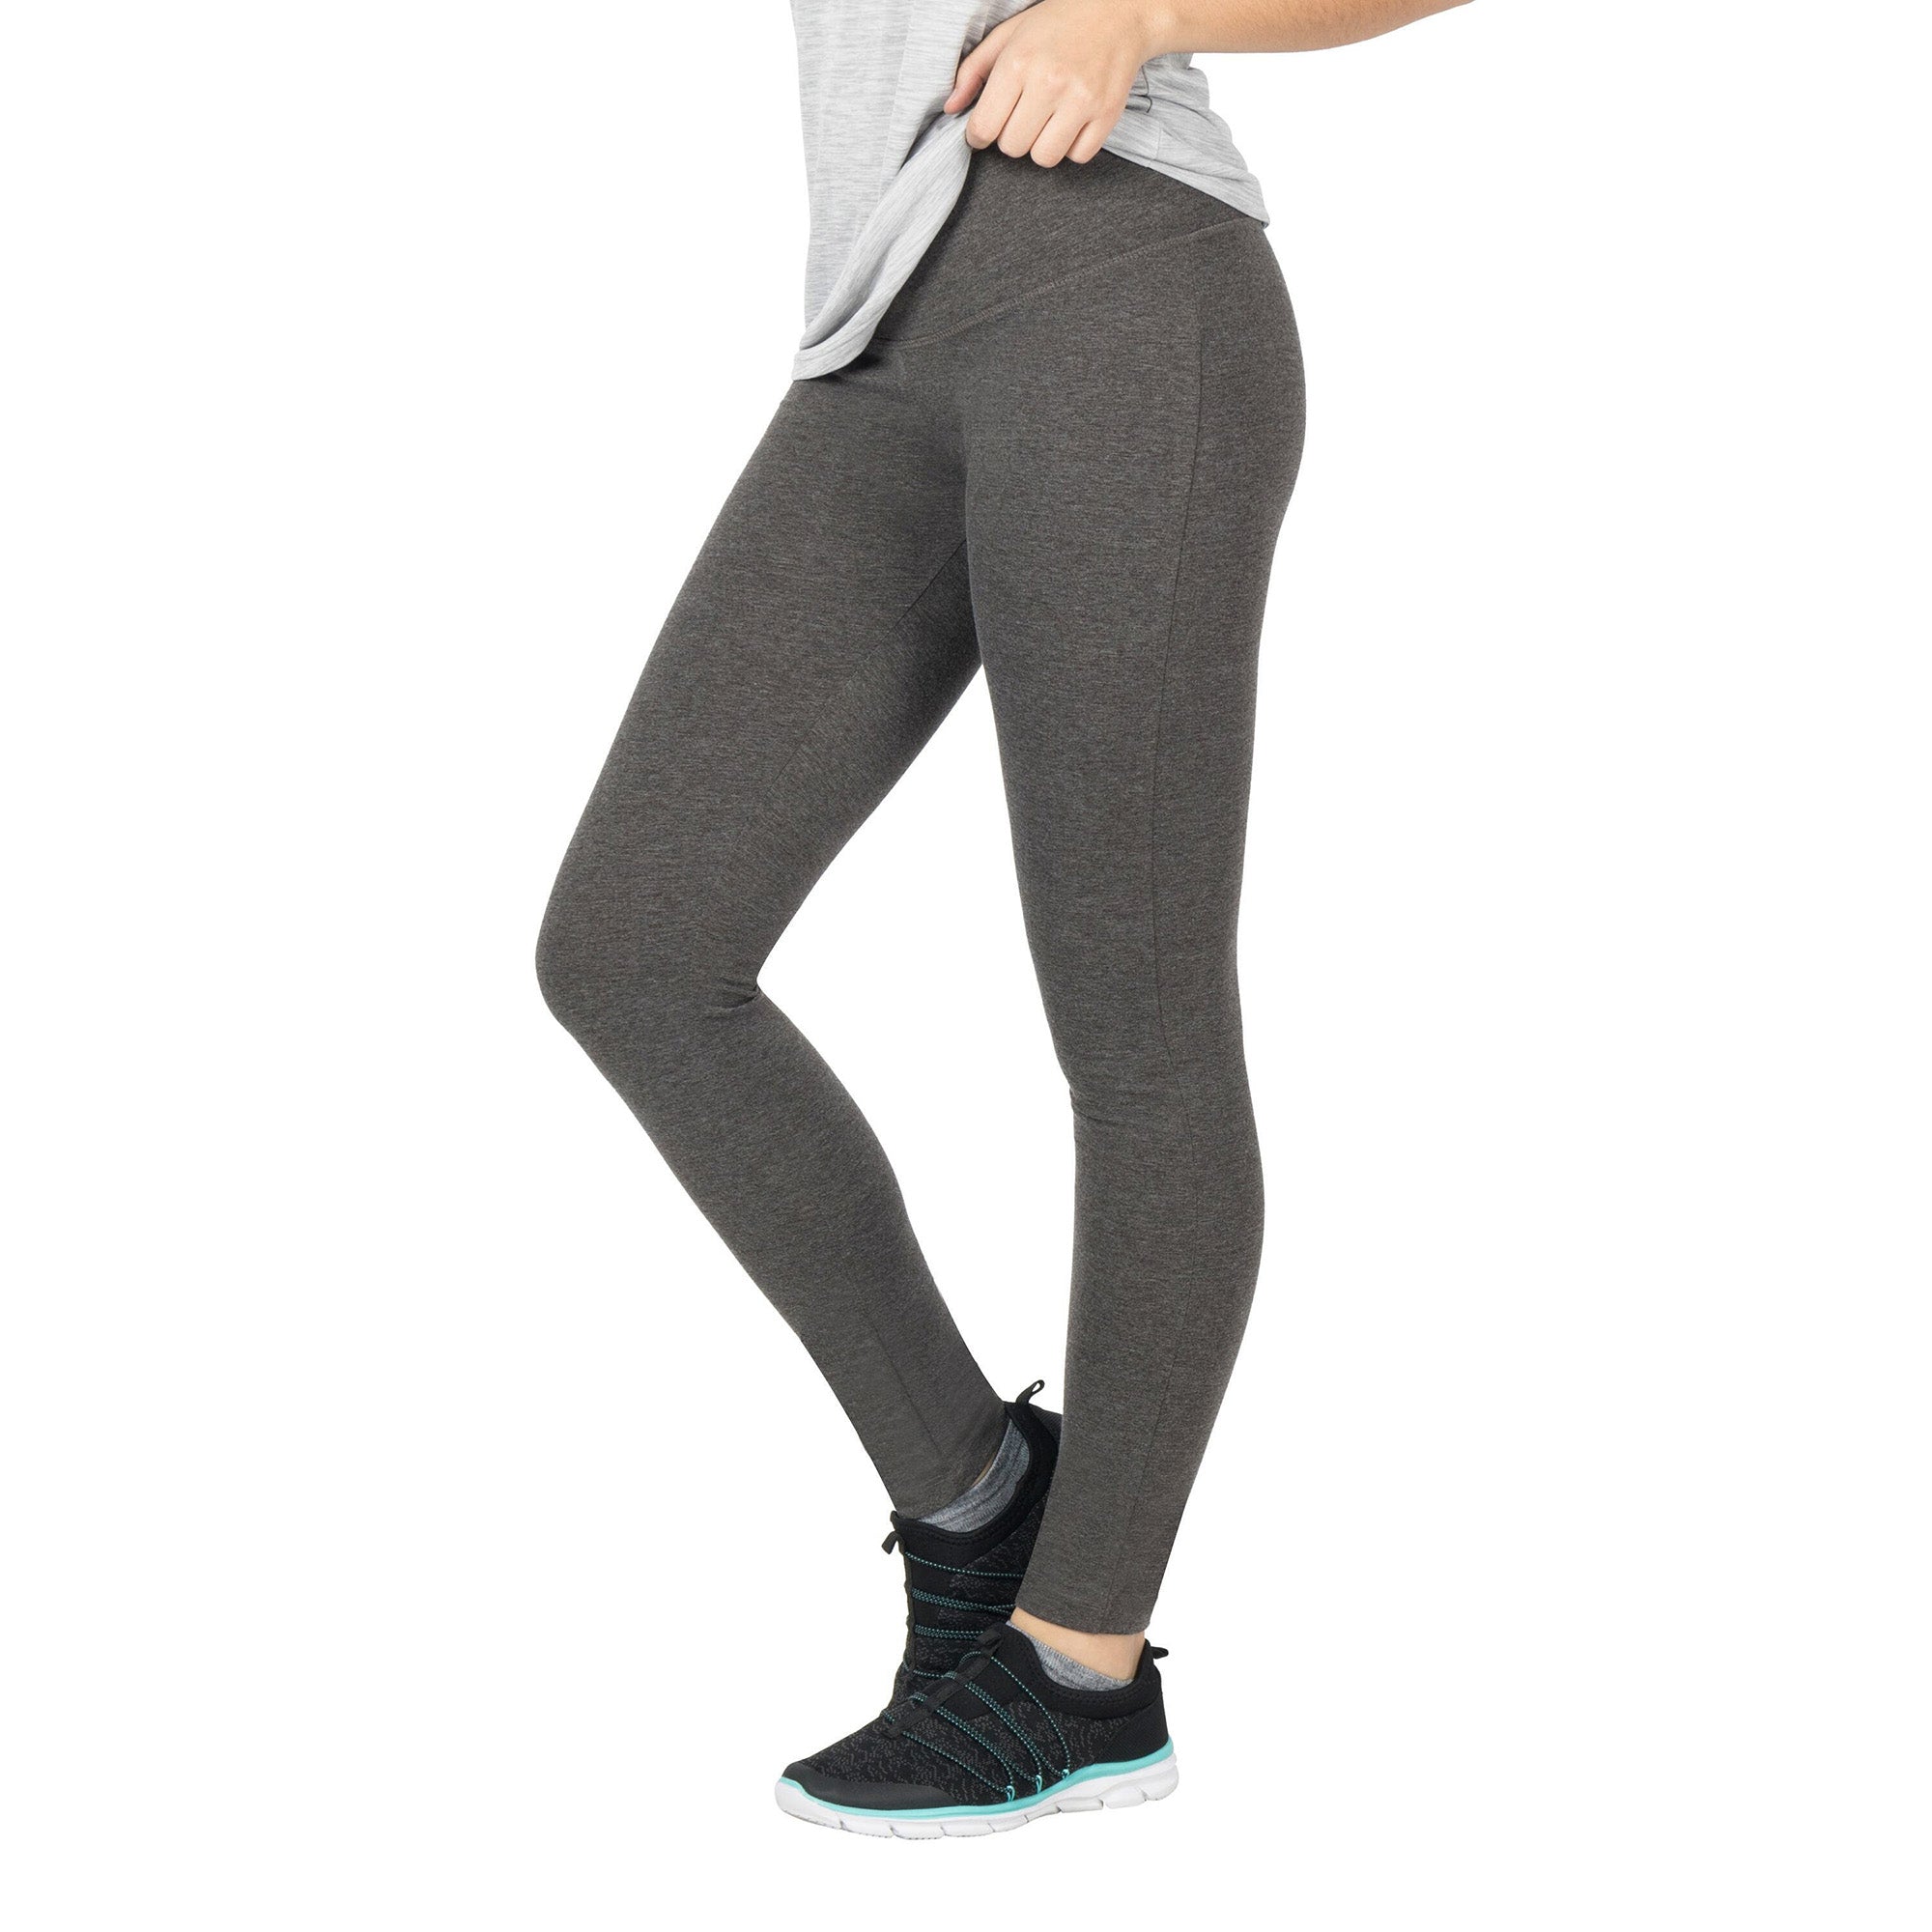 Hybrid leggings : Beautiful #Yoga Pants - #Exercise Leggings and